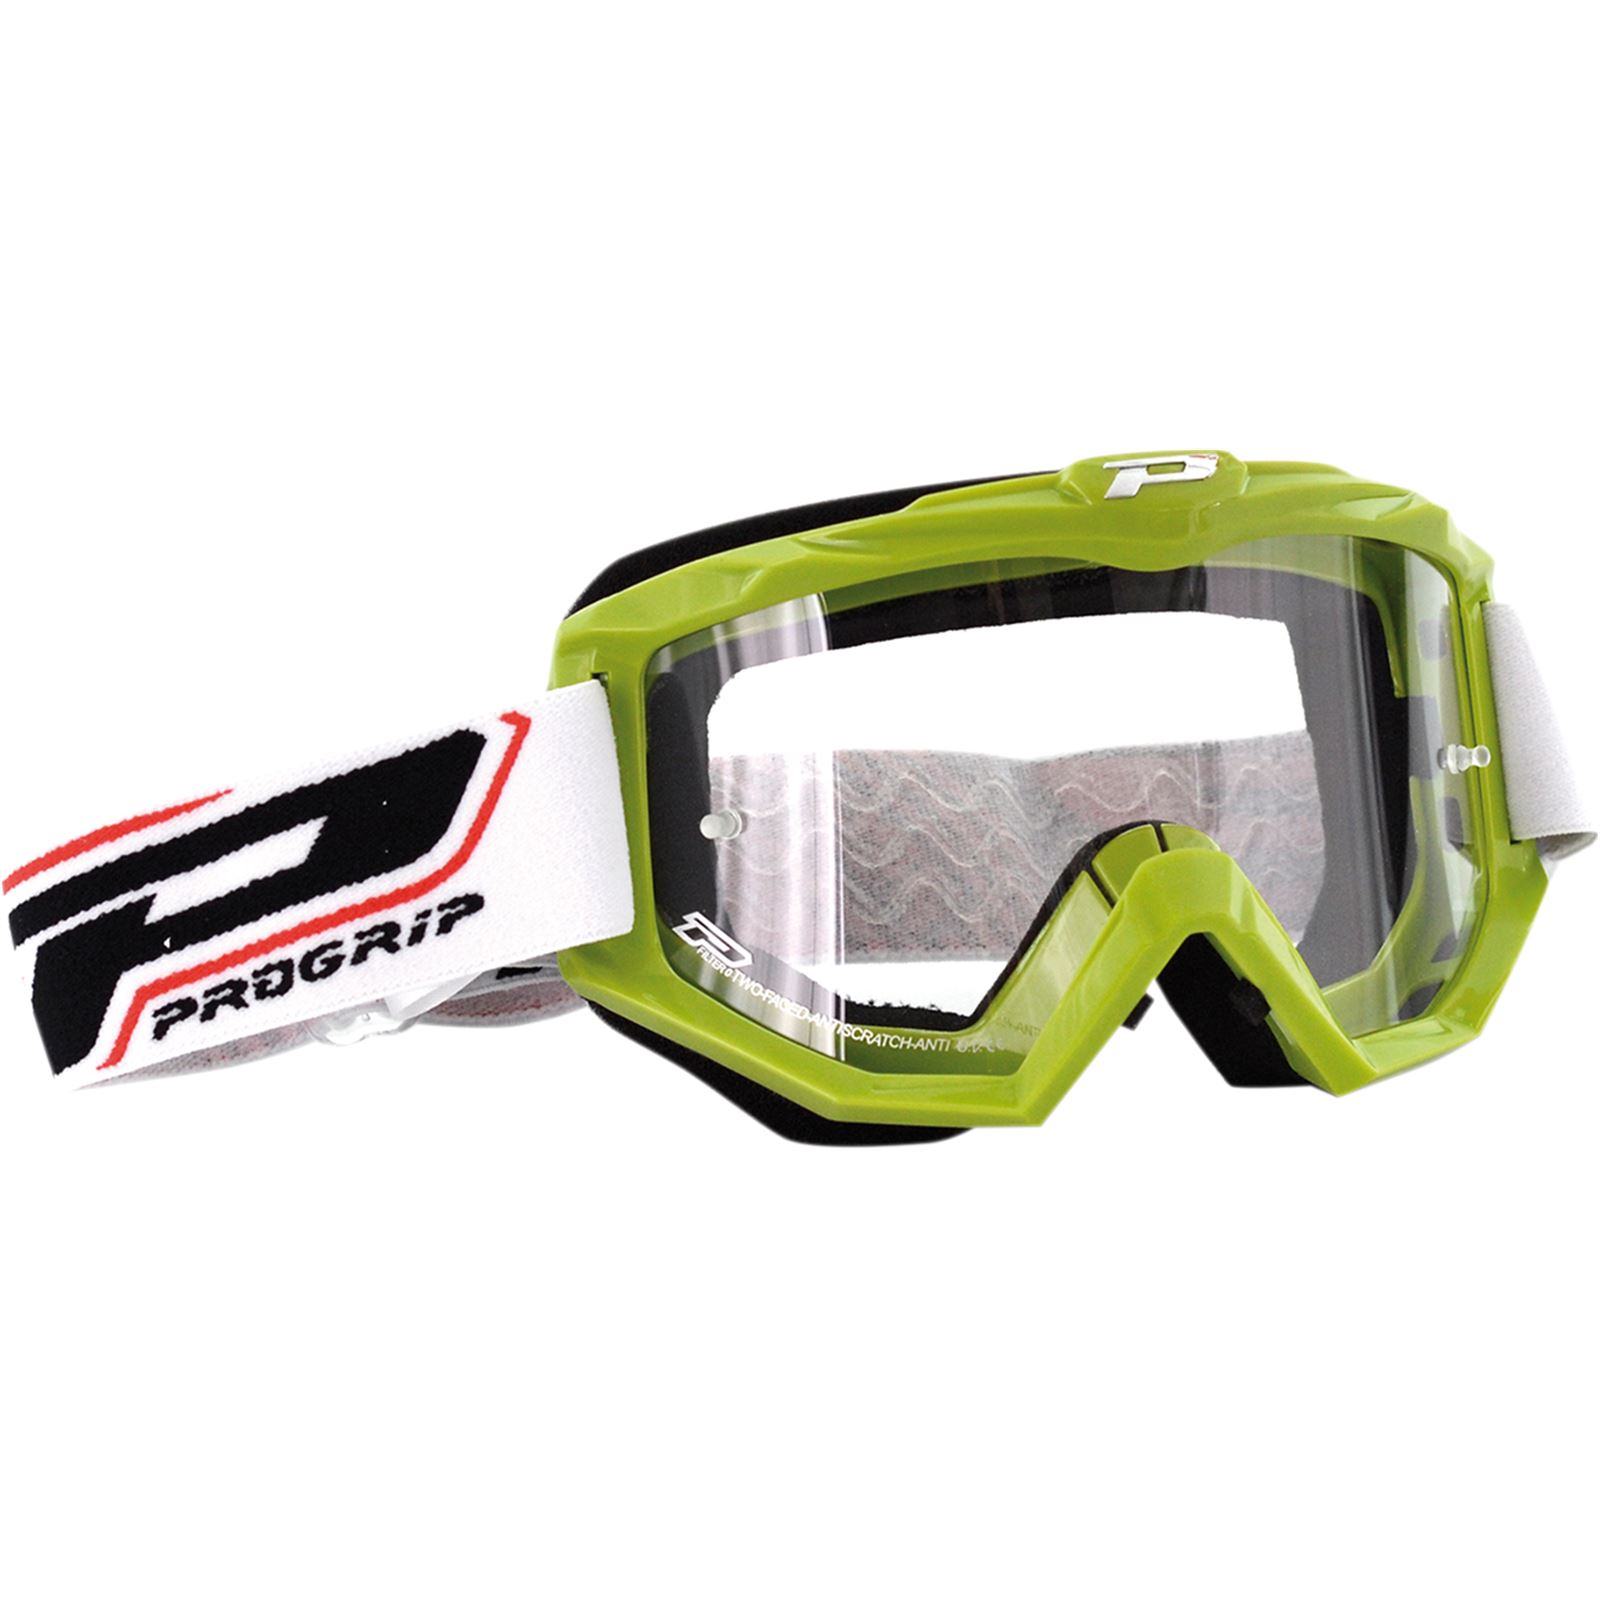 Pro Grip 3201 Raceline Goggles - Green